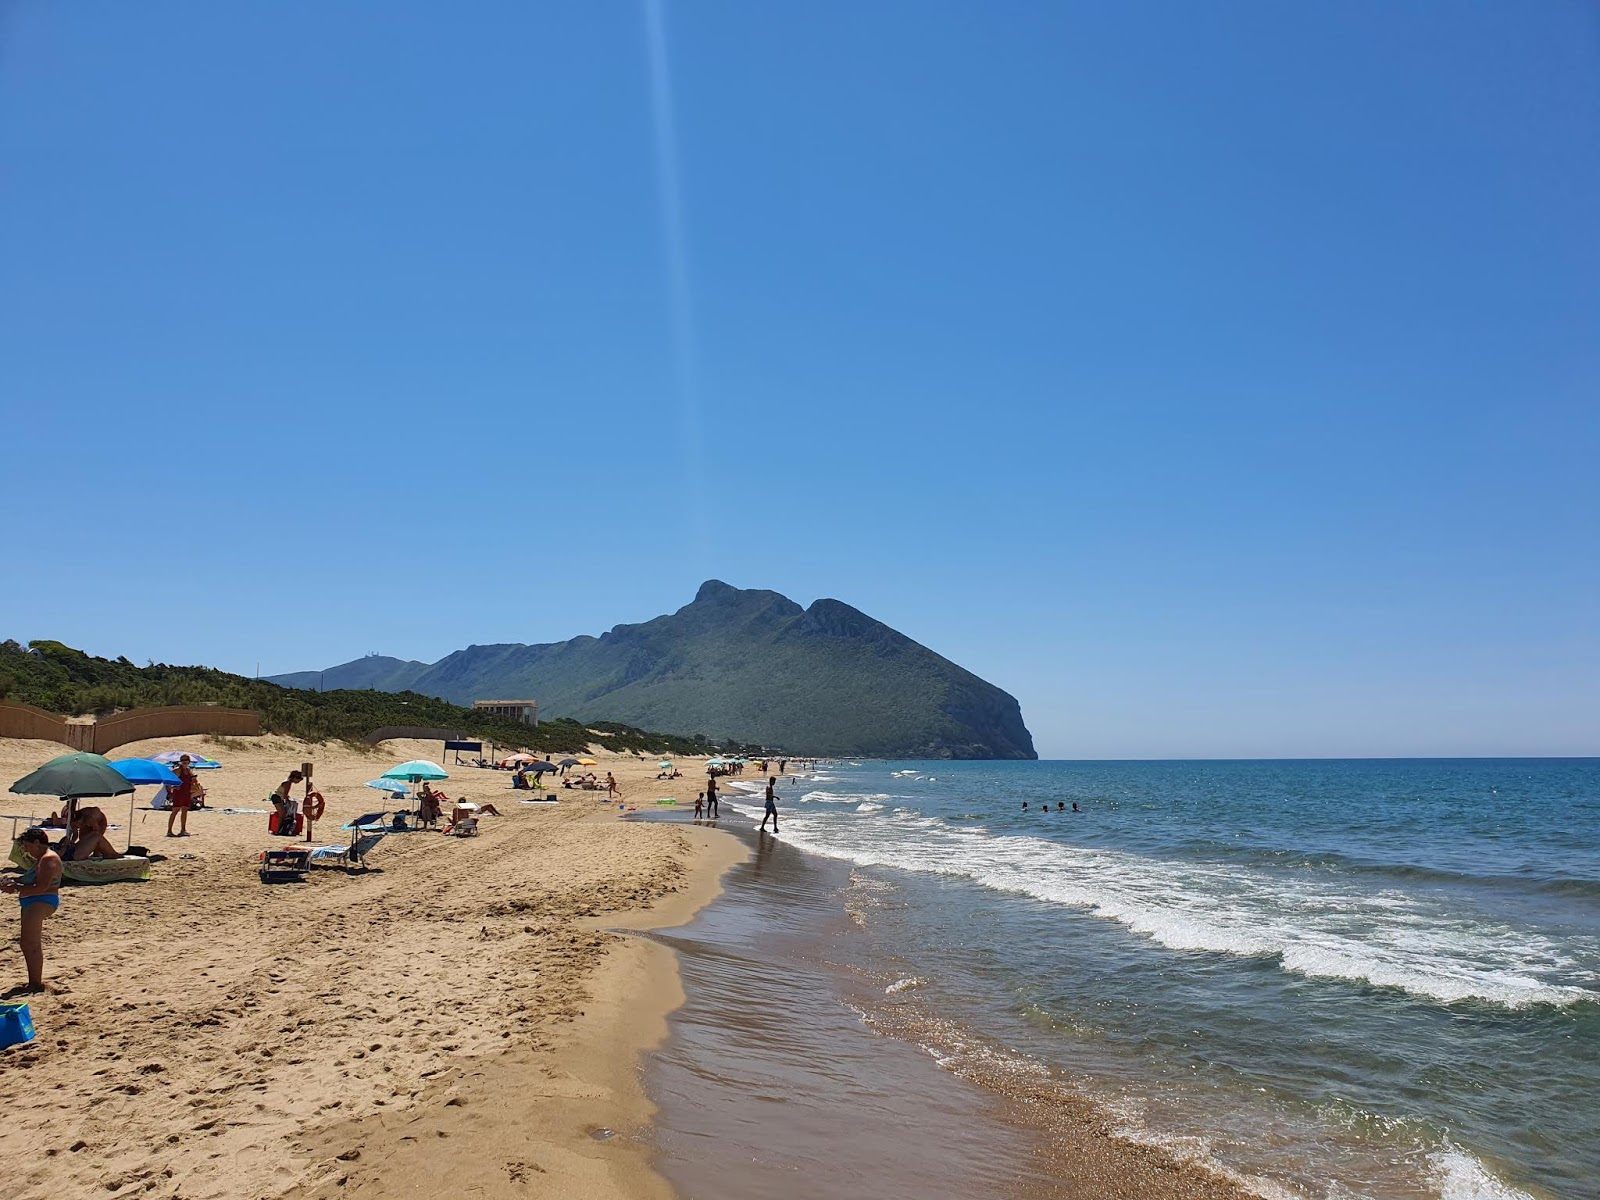 Foto av Spiaggia di Sabaudia med brunsand yta